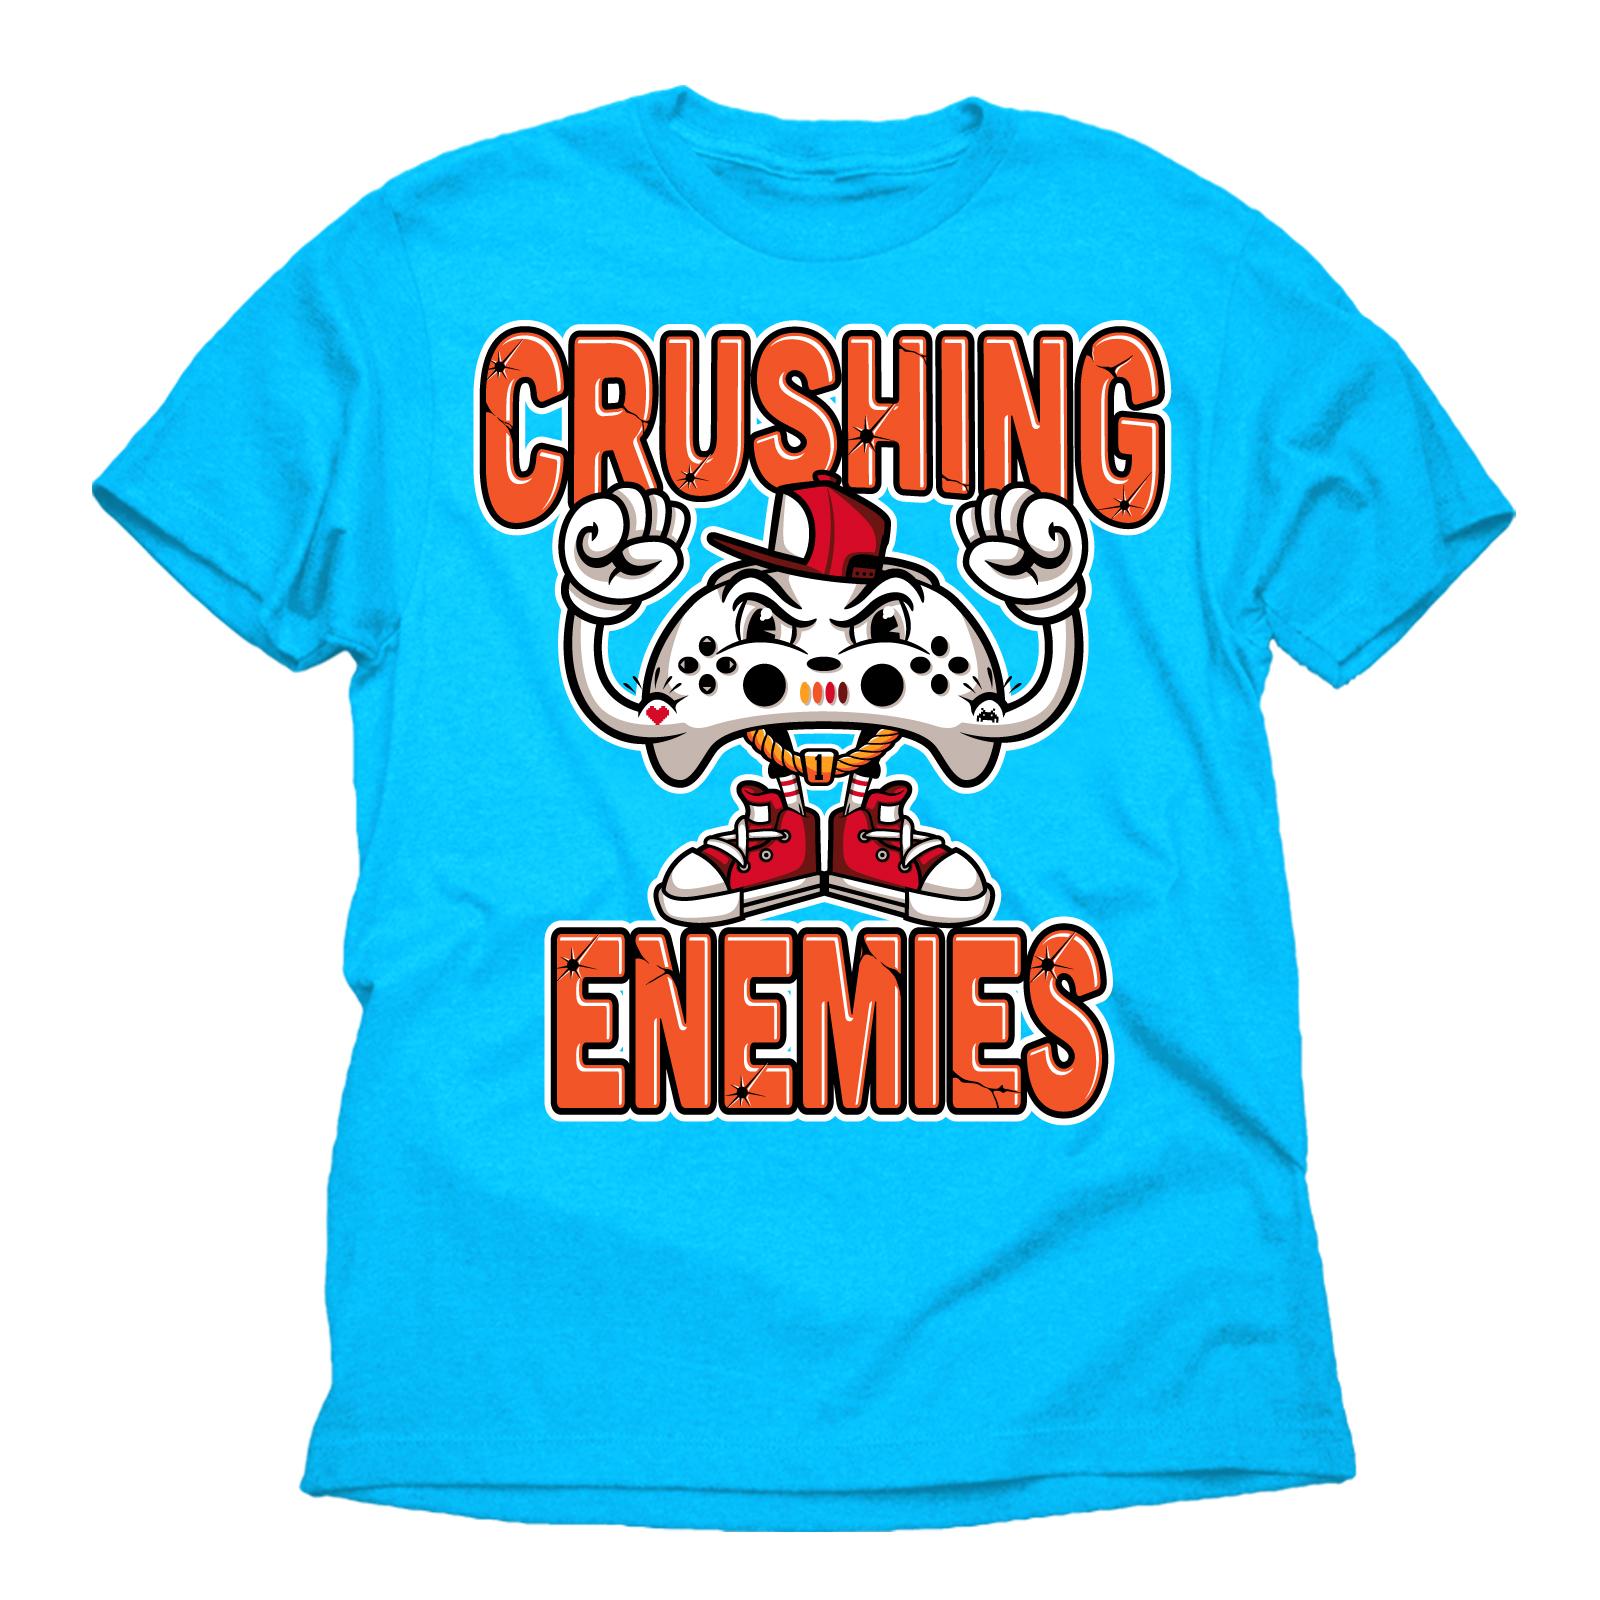 Route 66 Boy's Graphic T-Shirt - Crushing Enemies